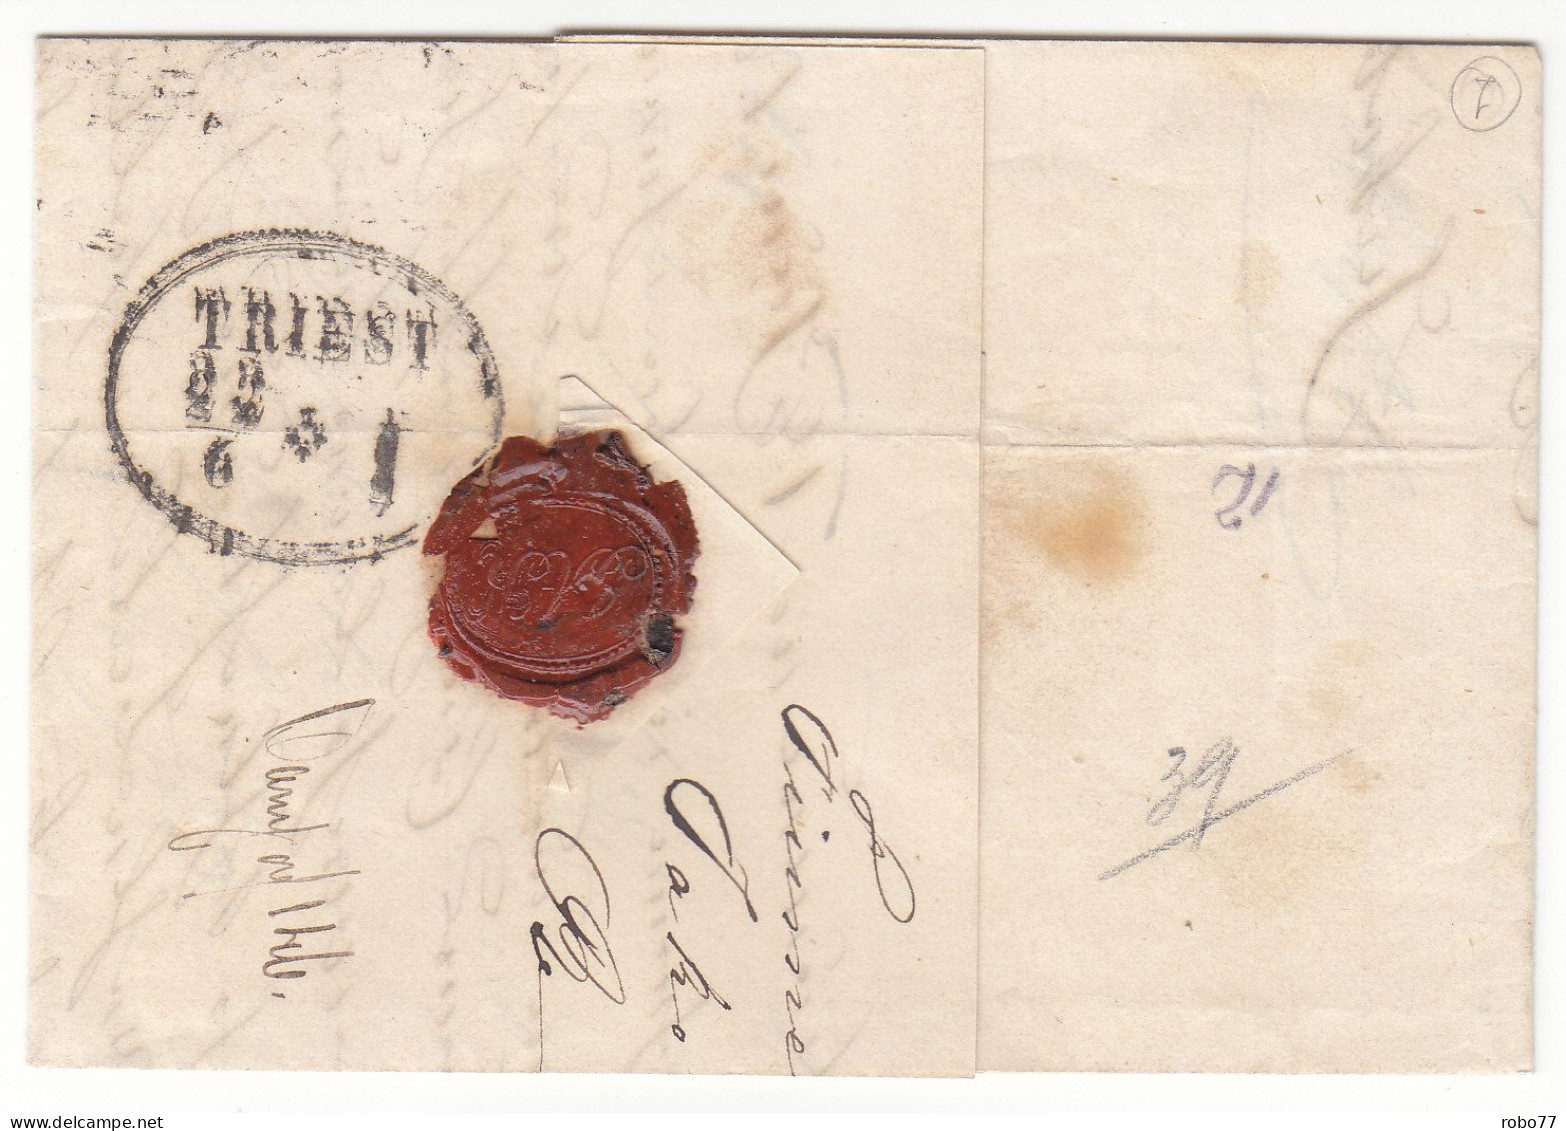 1864 Hungary Cover, Card, Letter. FIUME, Triest. RARE! (G13c264) - ...-1867 Prefilatelia